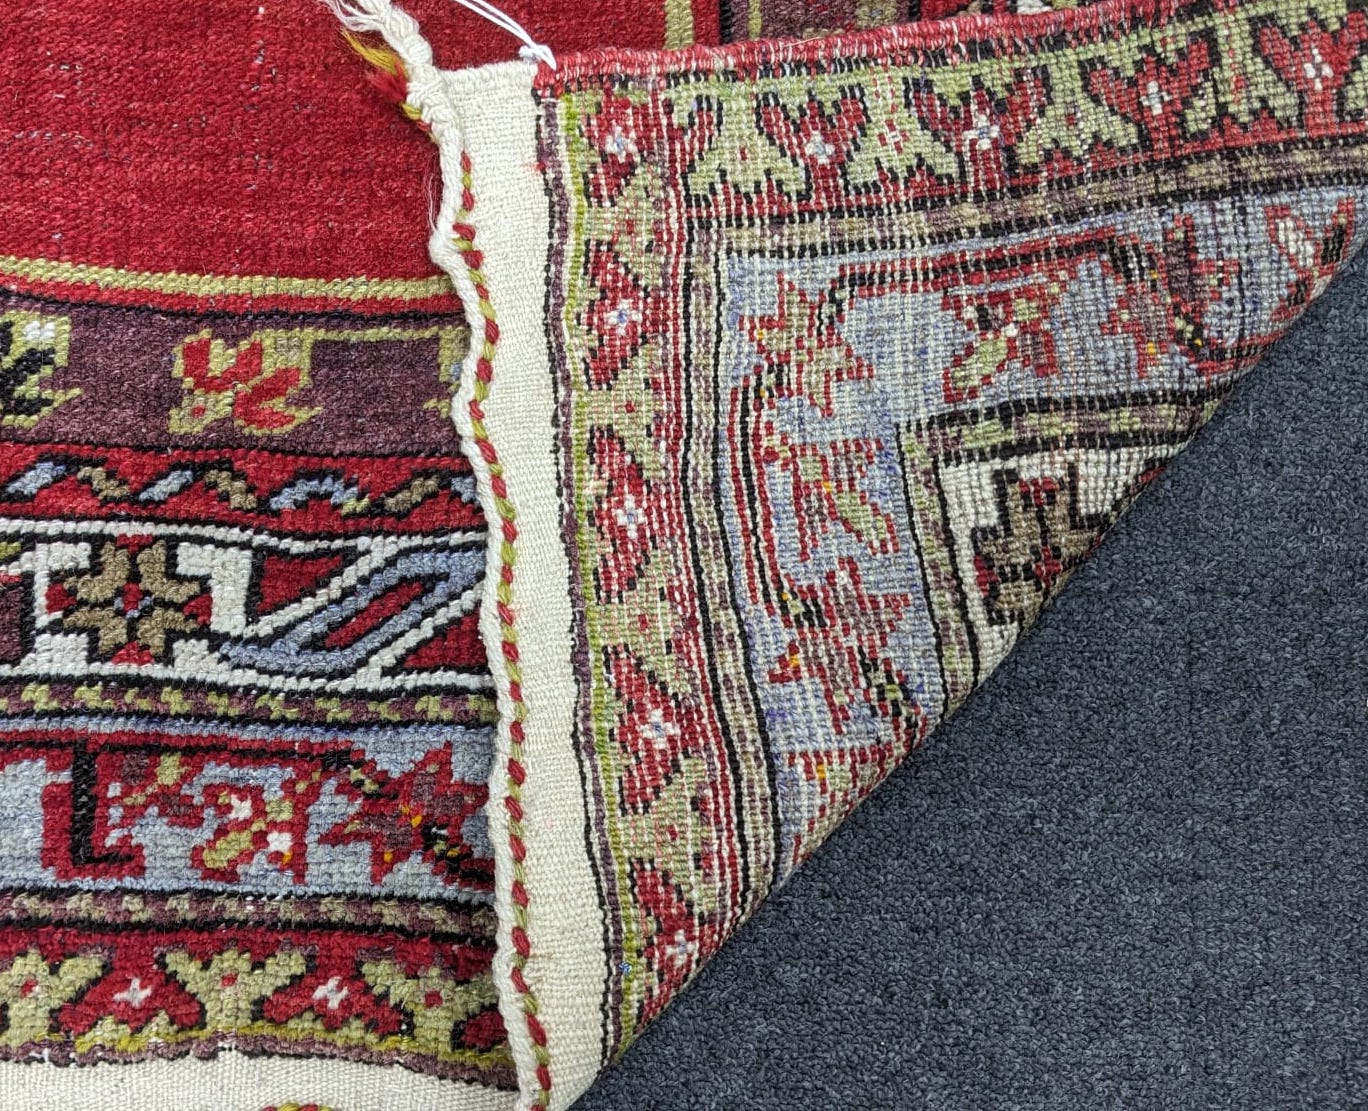 A Kesimuhsine Konya red ground prayer rug, 194 x 104cm